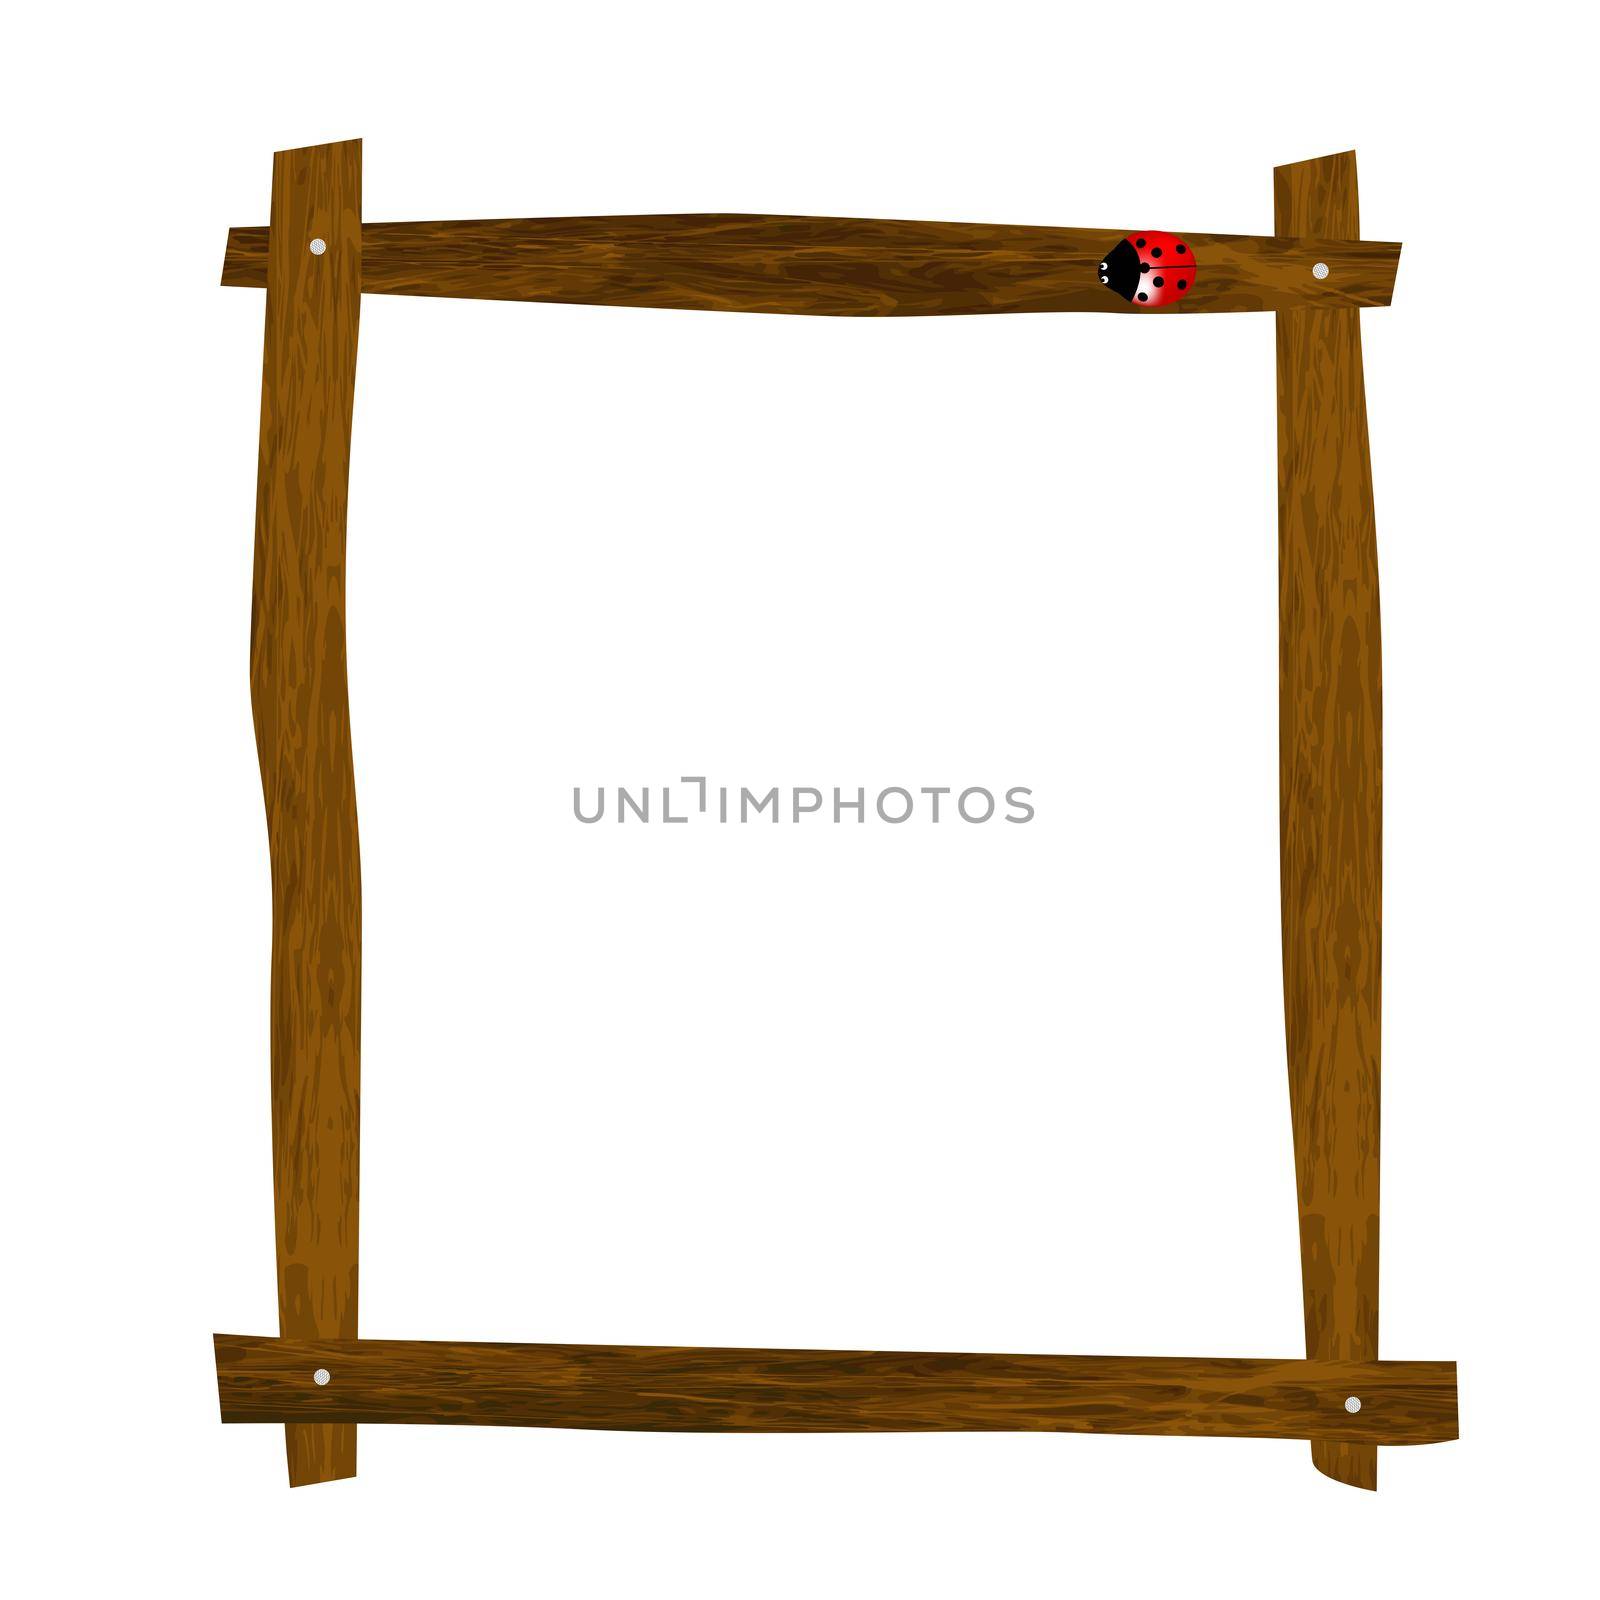 Empty wooden frame with ladybug by hibrida13